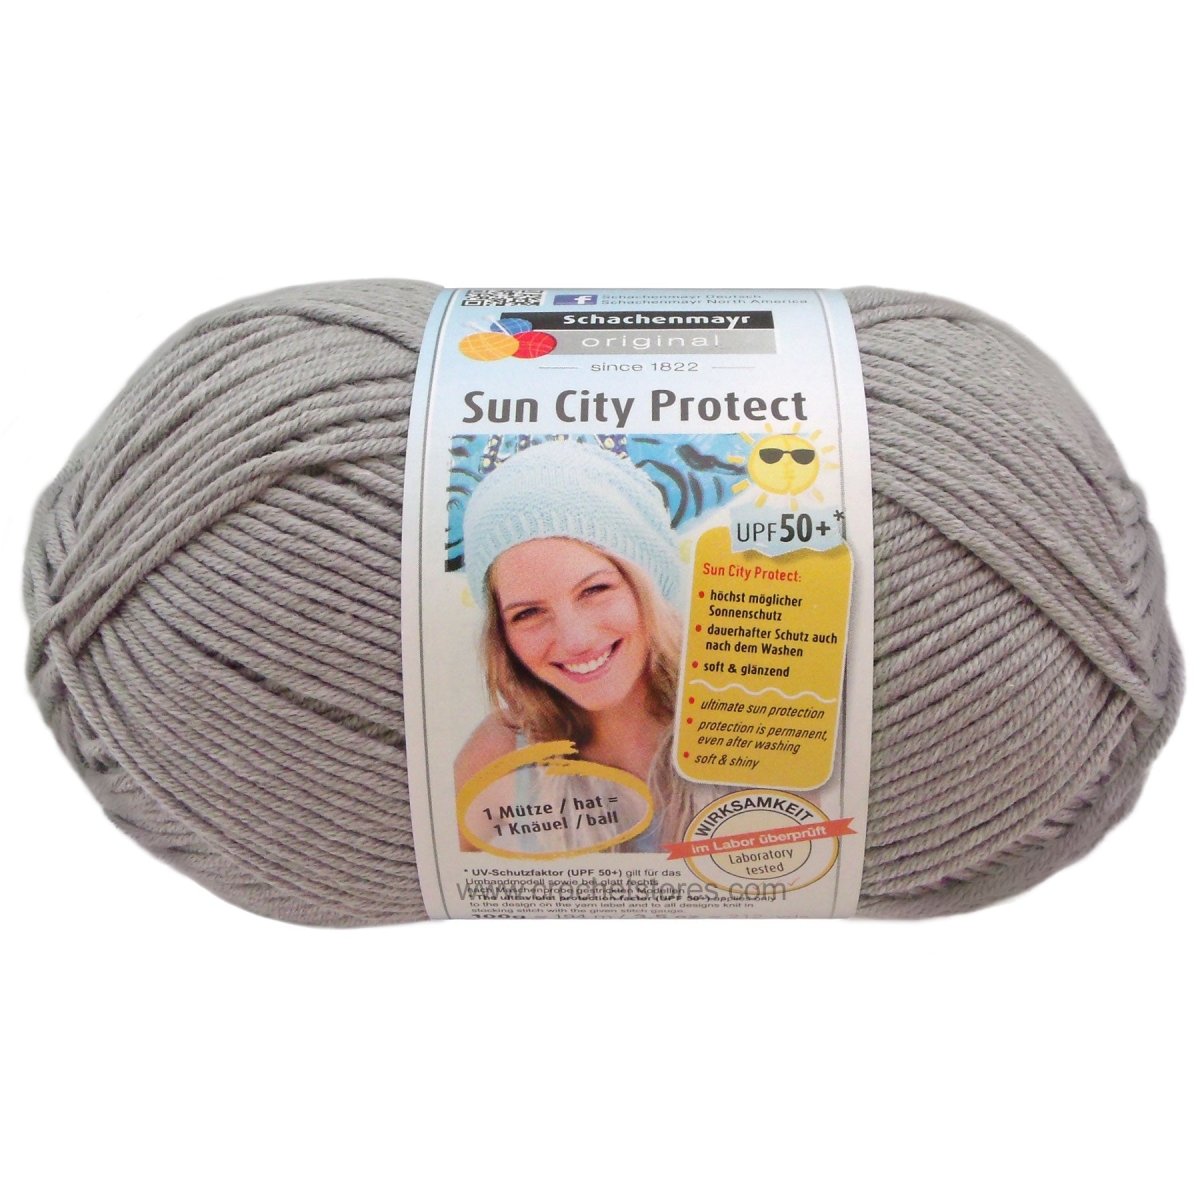 SUN CITY PROTECT - Crochetstores9807778-4904053859018944